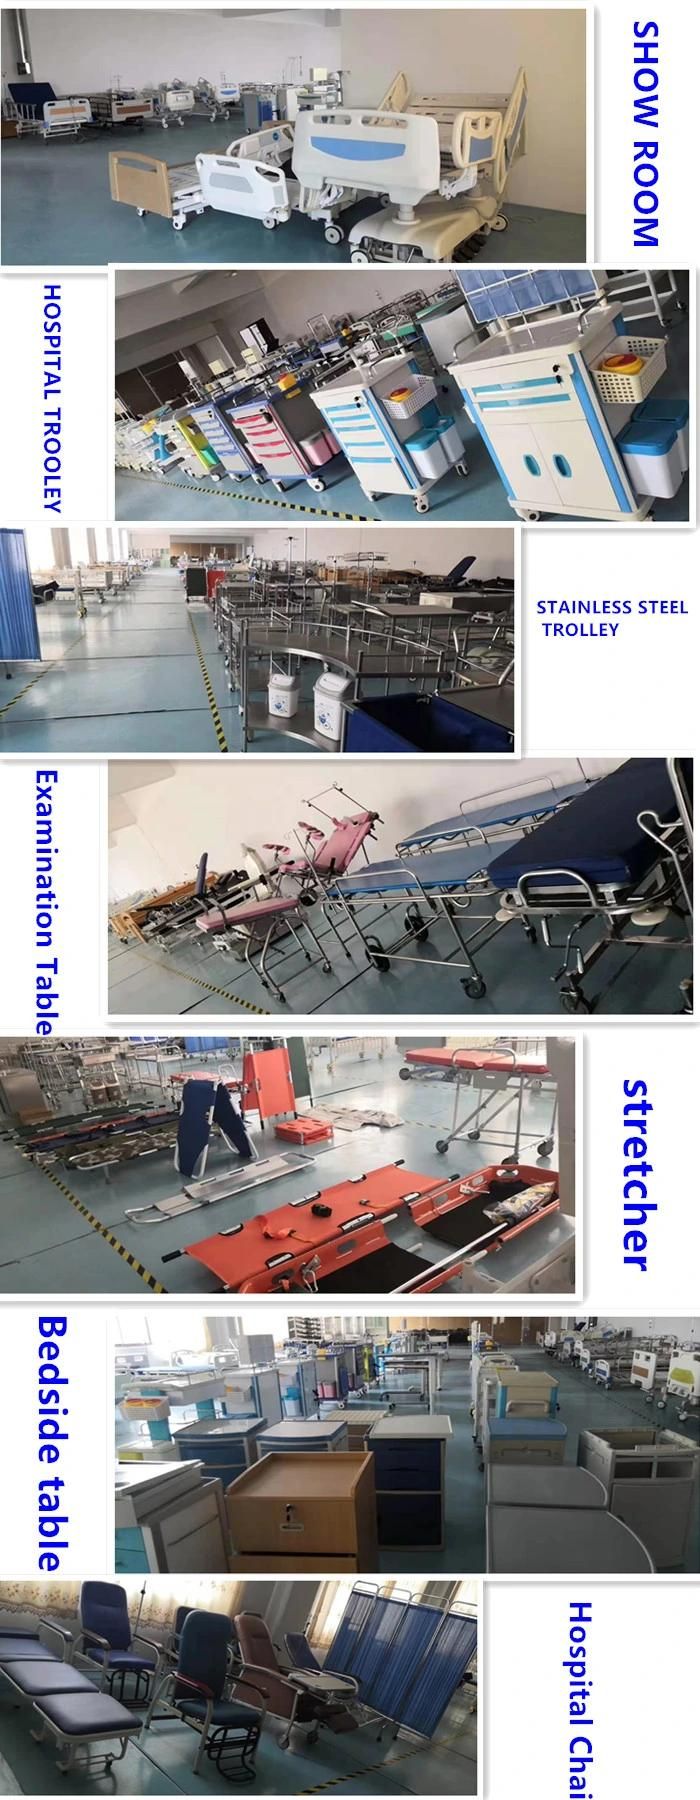 4 Foldable Stretcher Emergency Folding Stretcher Hospital Equipment